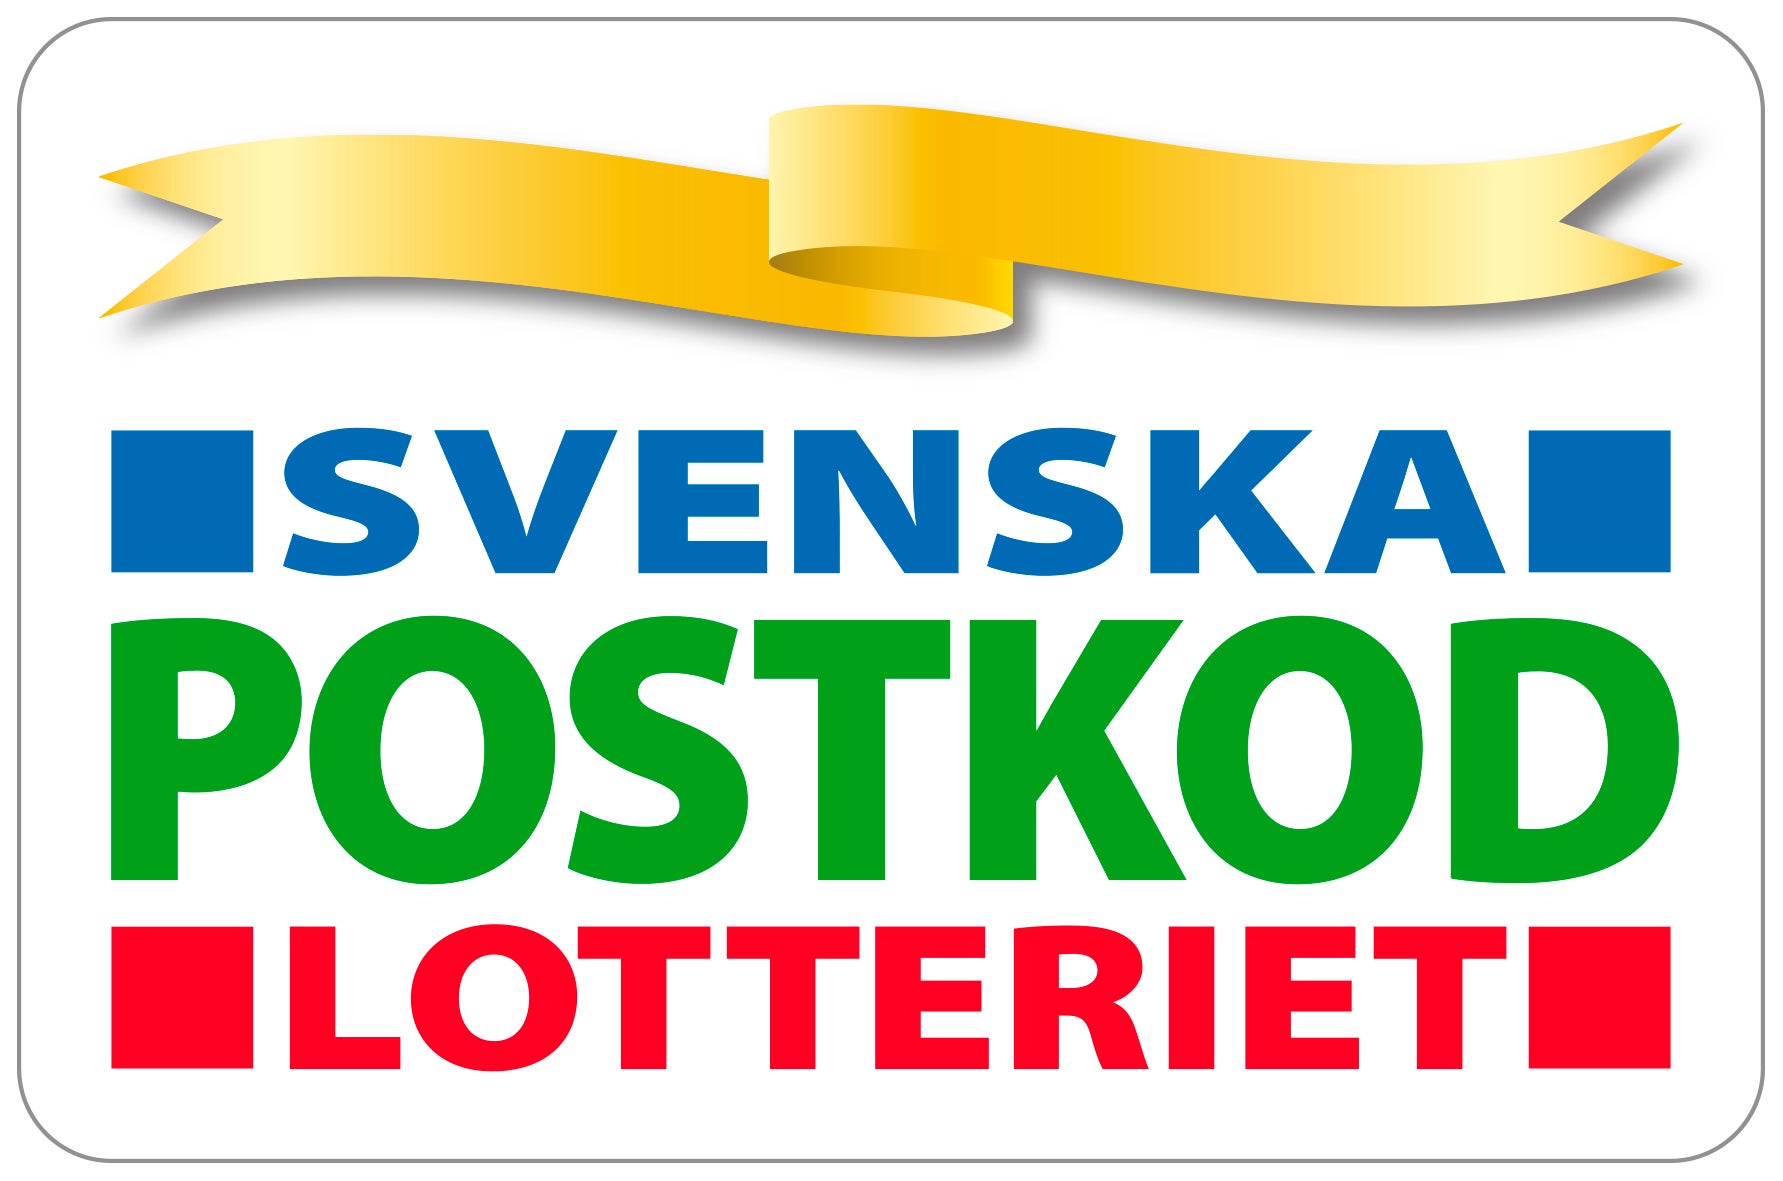 Svenska postkodlotteriet logo